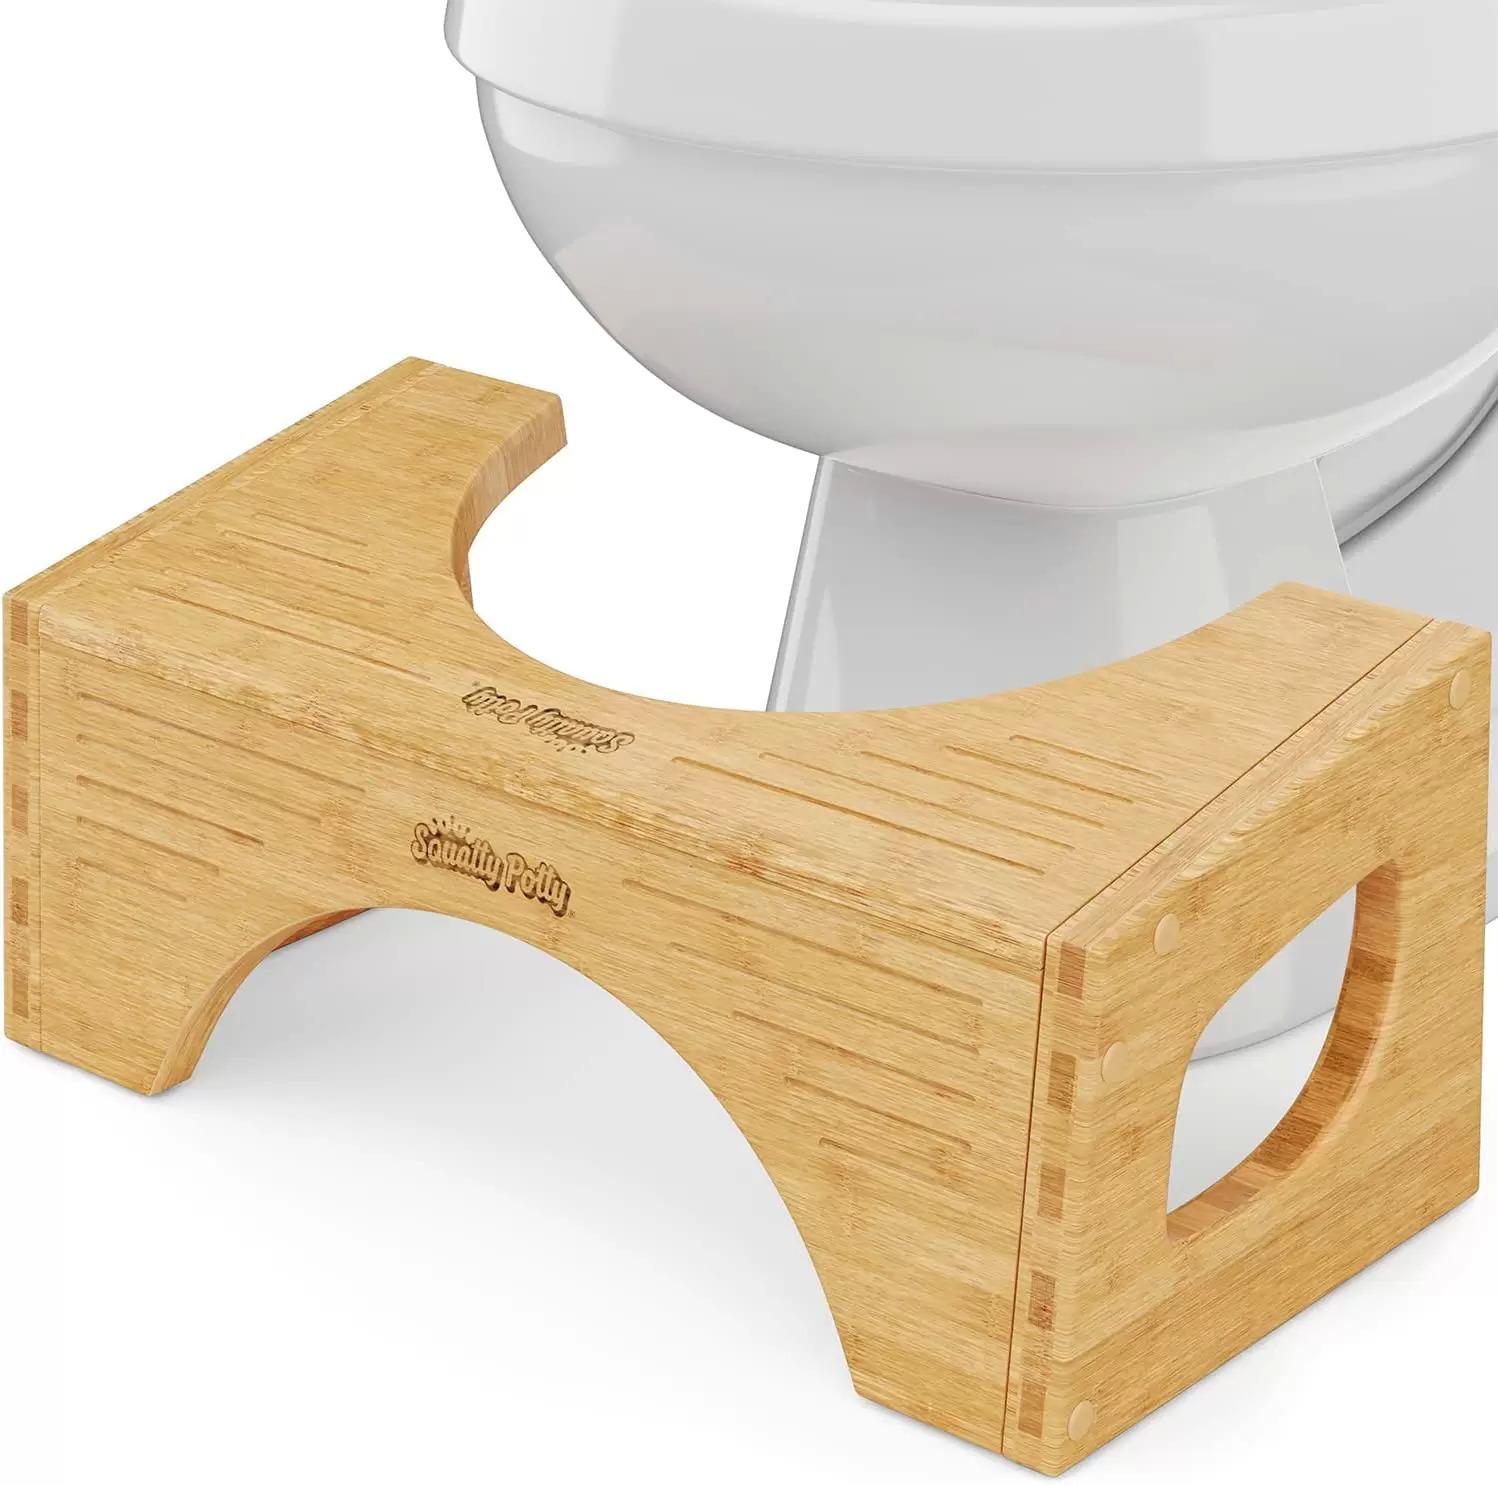 Squatty Potty The Original Bamboo Toilet Flip Stool for $24.99